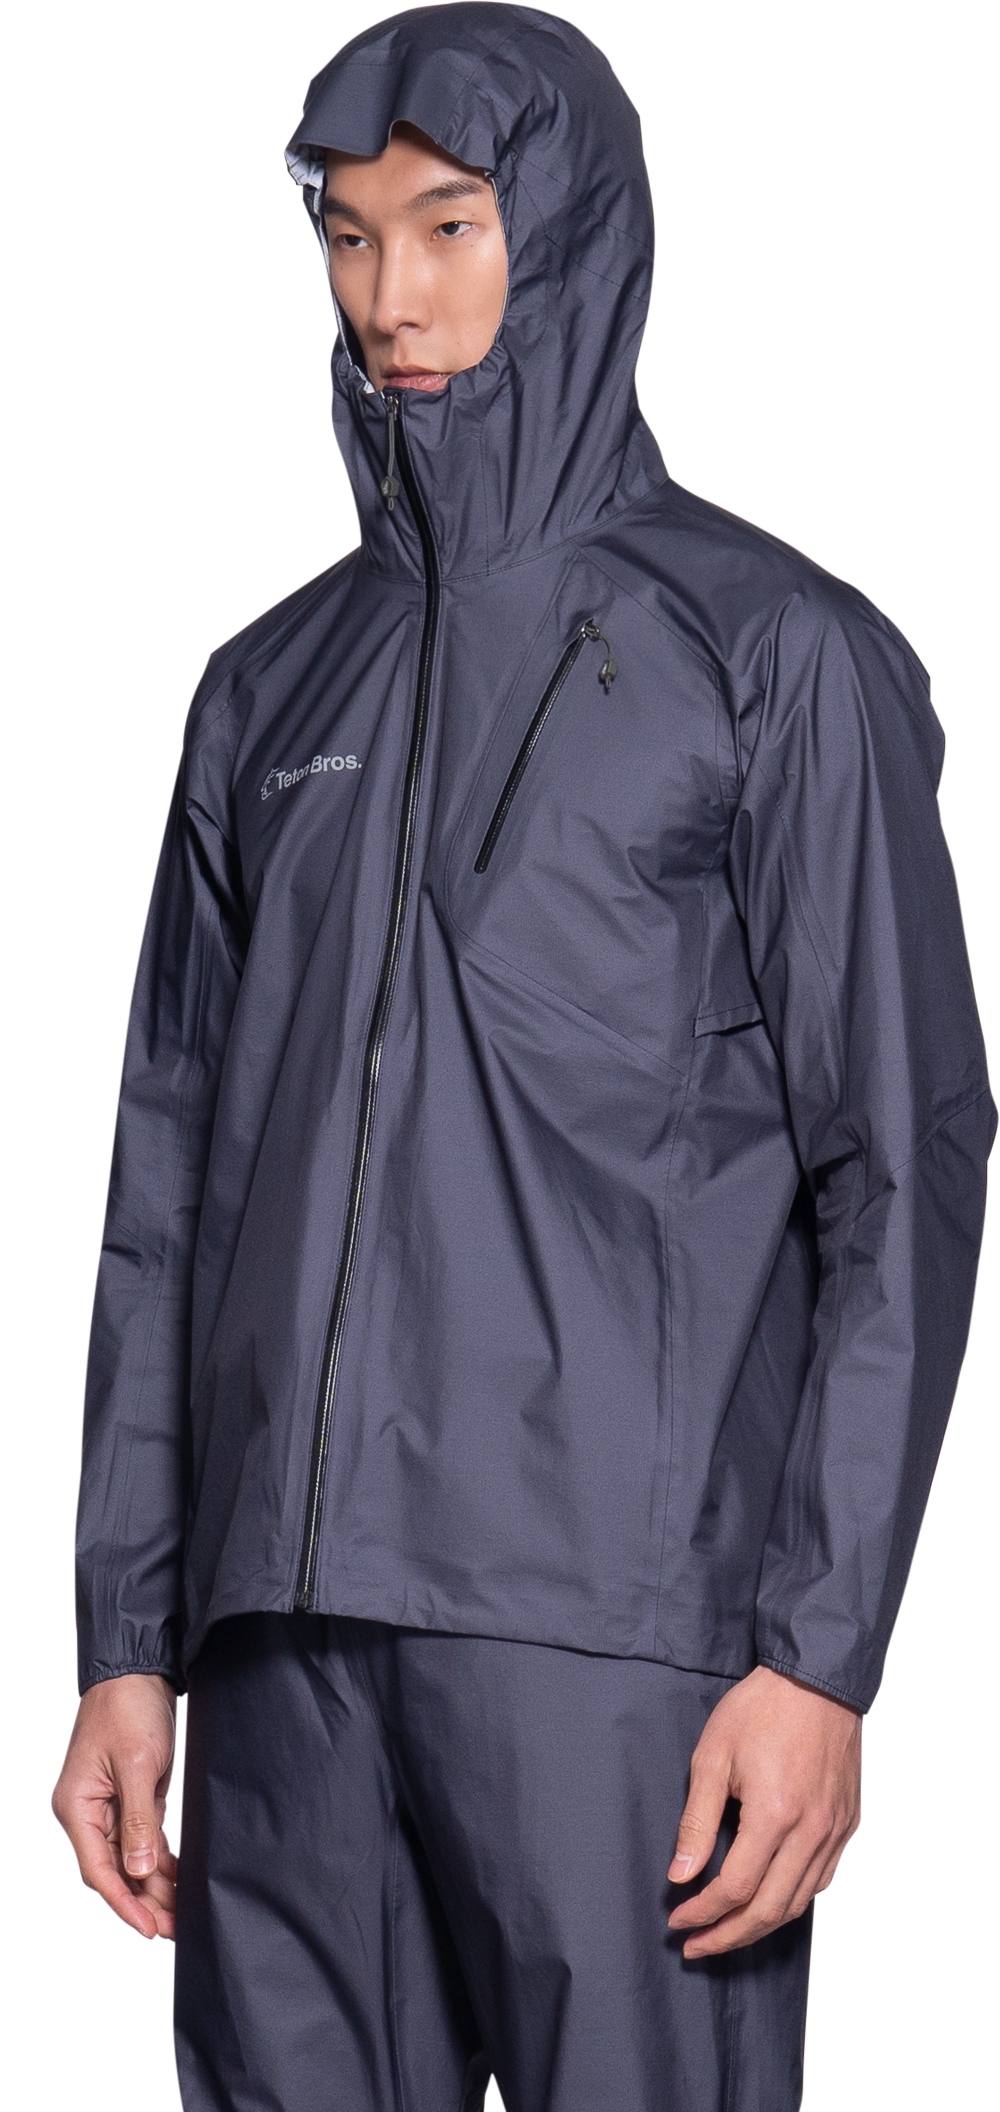 Teton Bros. Feather Rain Full Zip Jacket Black GRAY SHOP